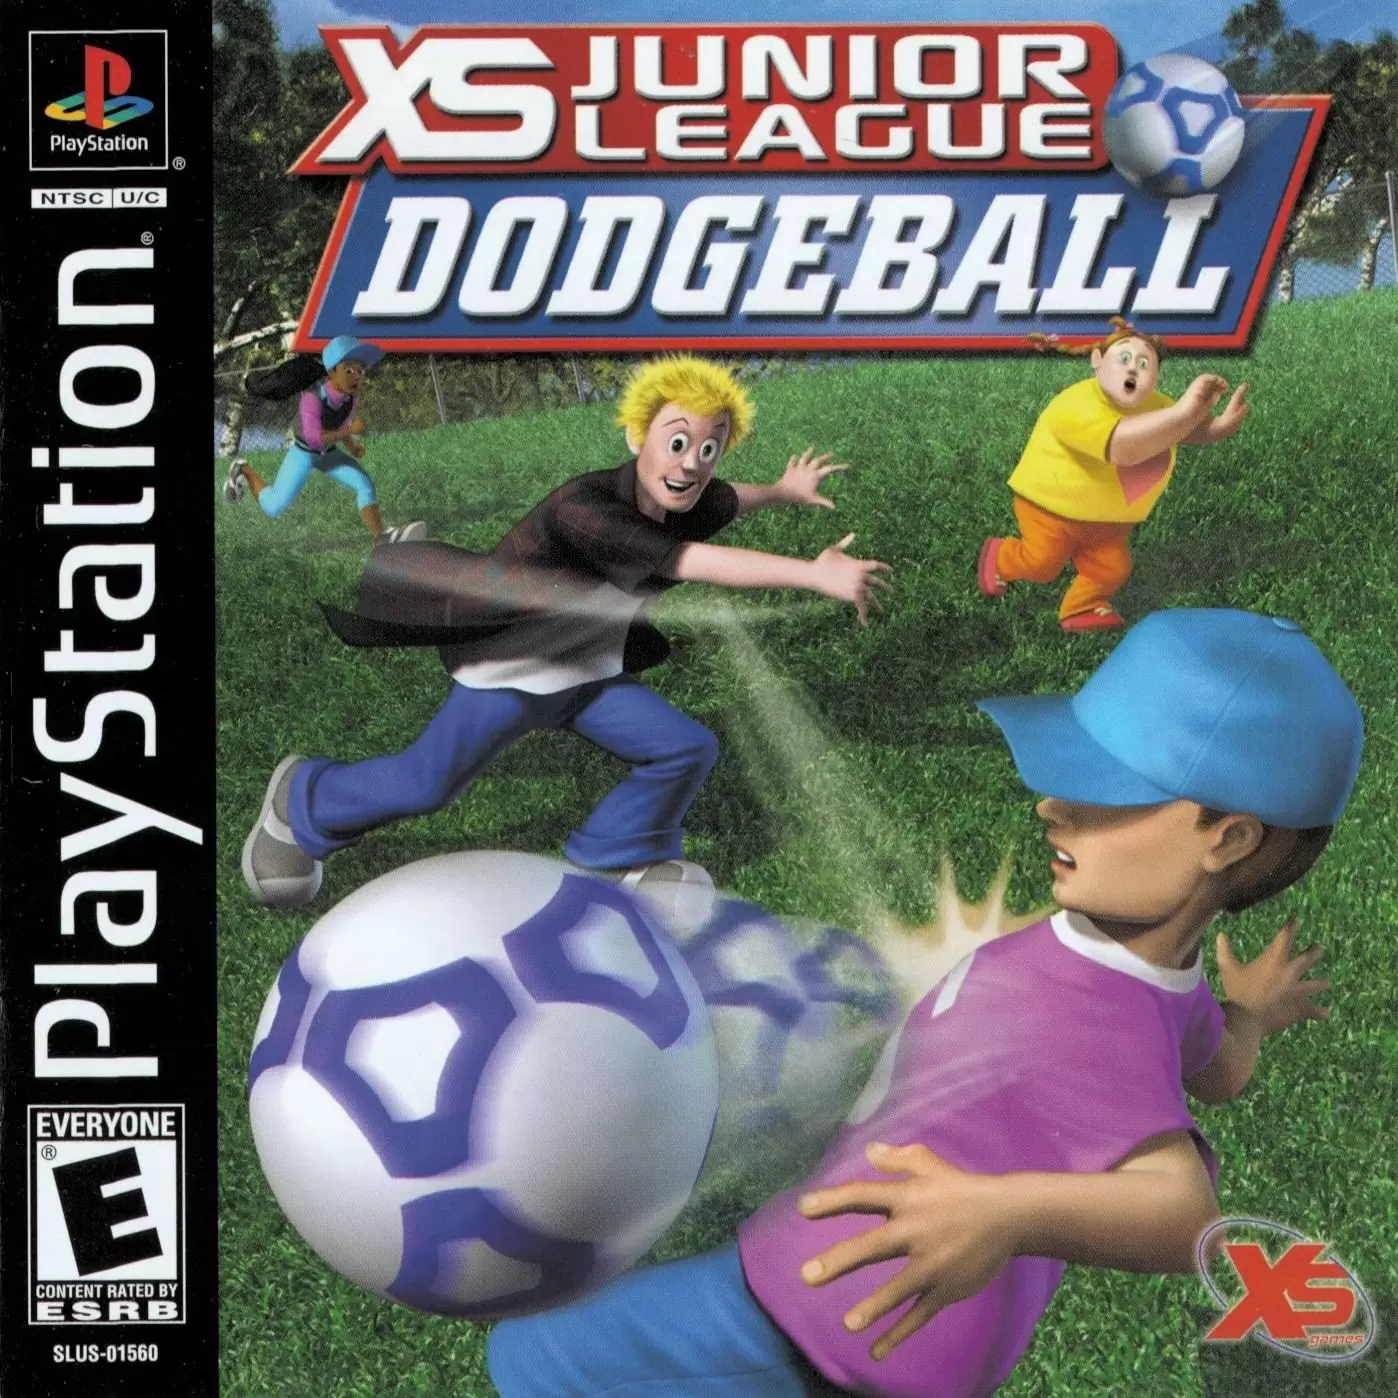 Playstation games - XS Junior League Dodgeball